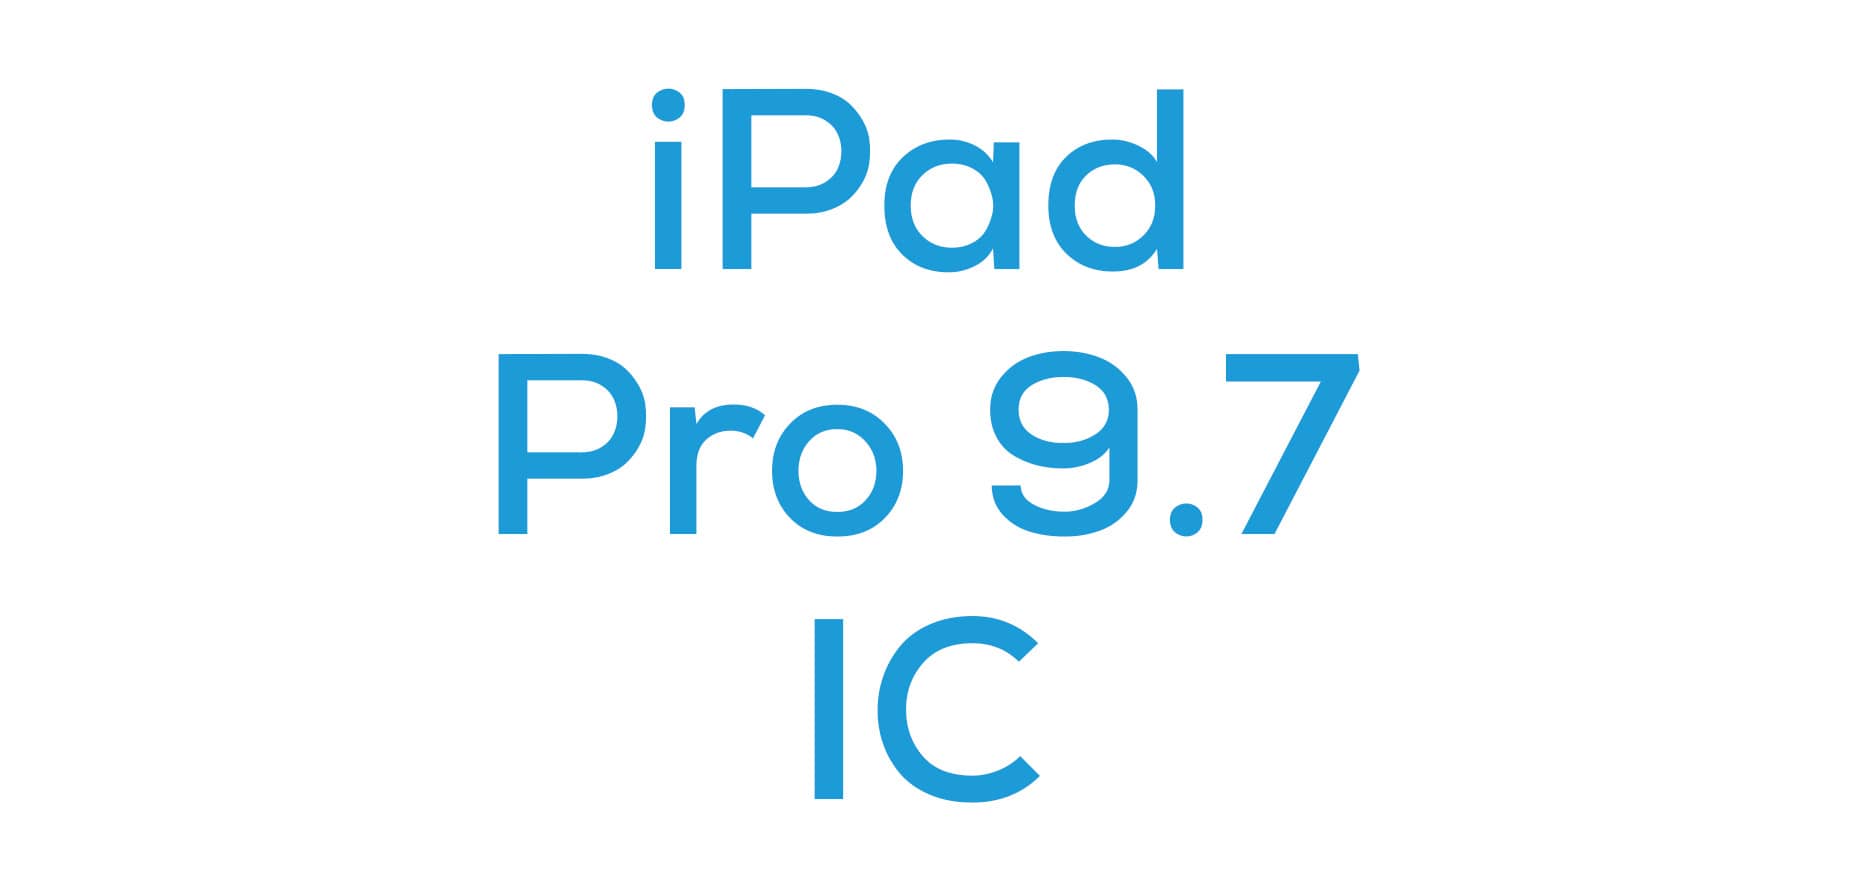 iPad Pro 9.7 IC